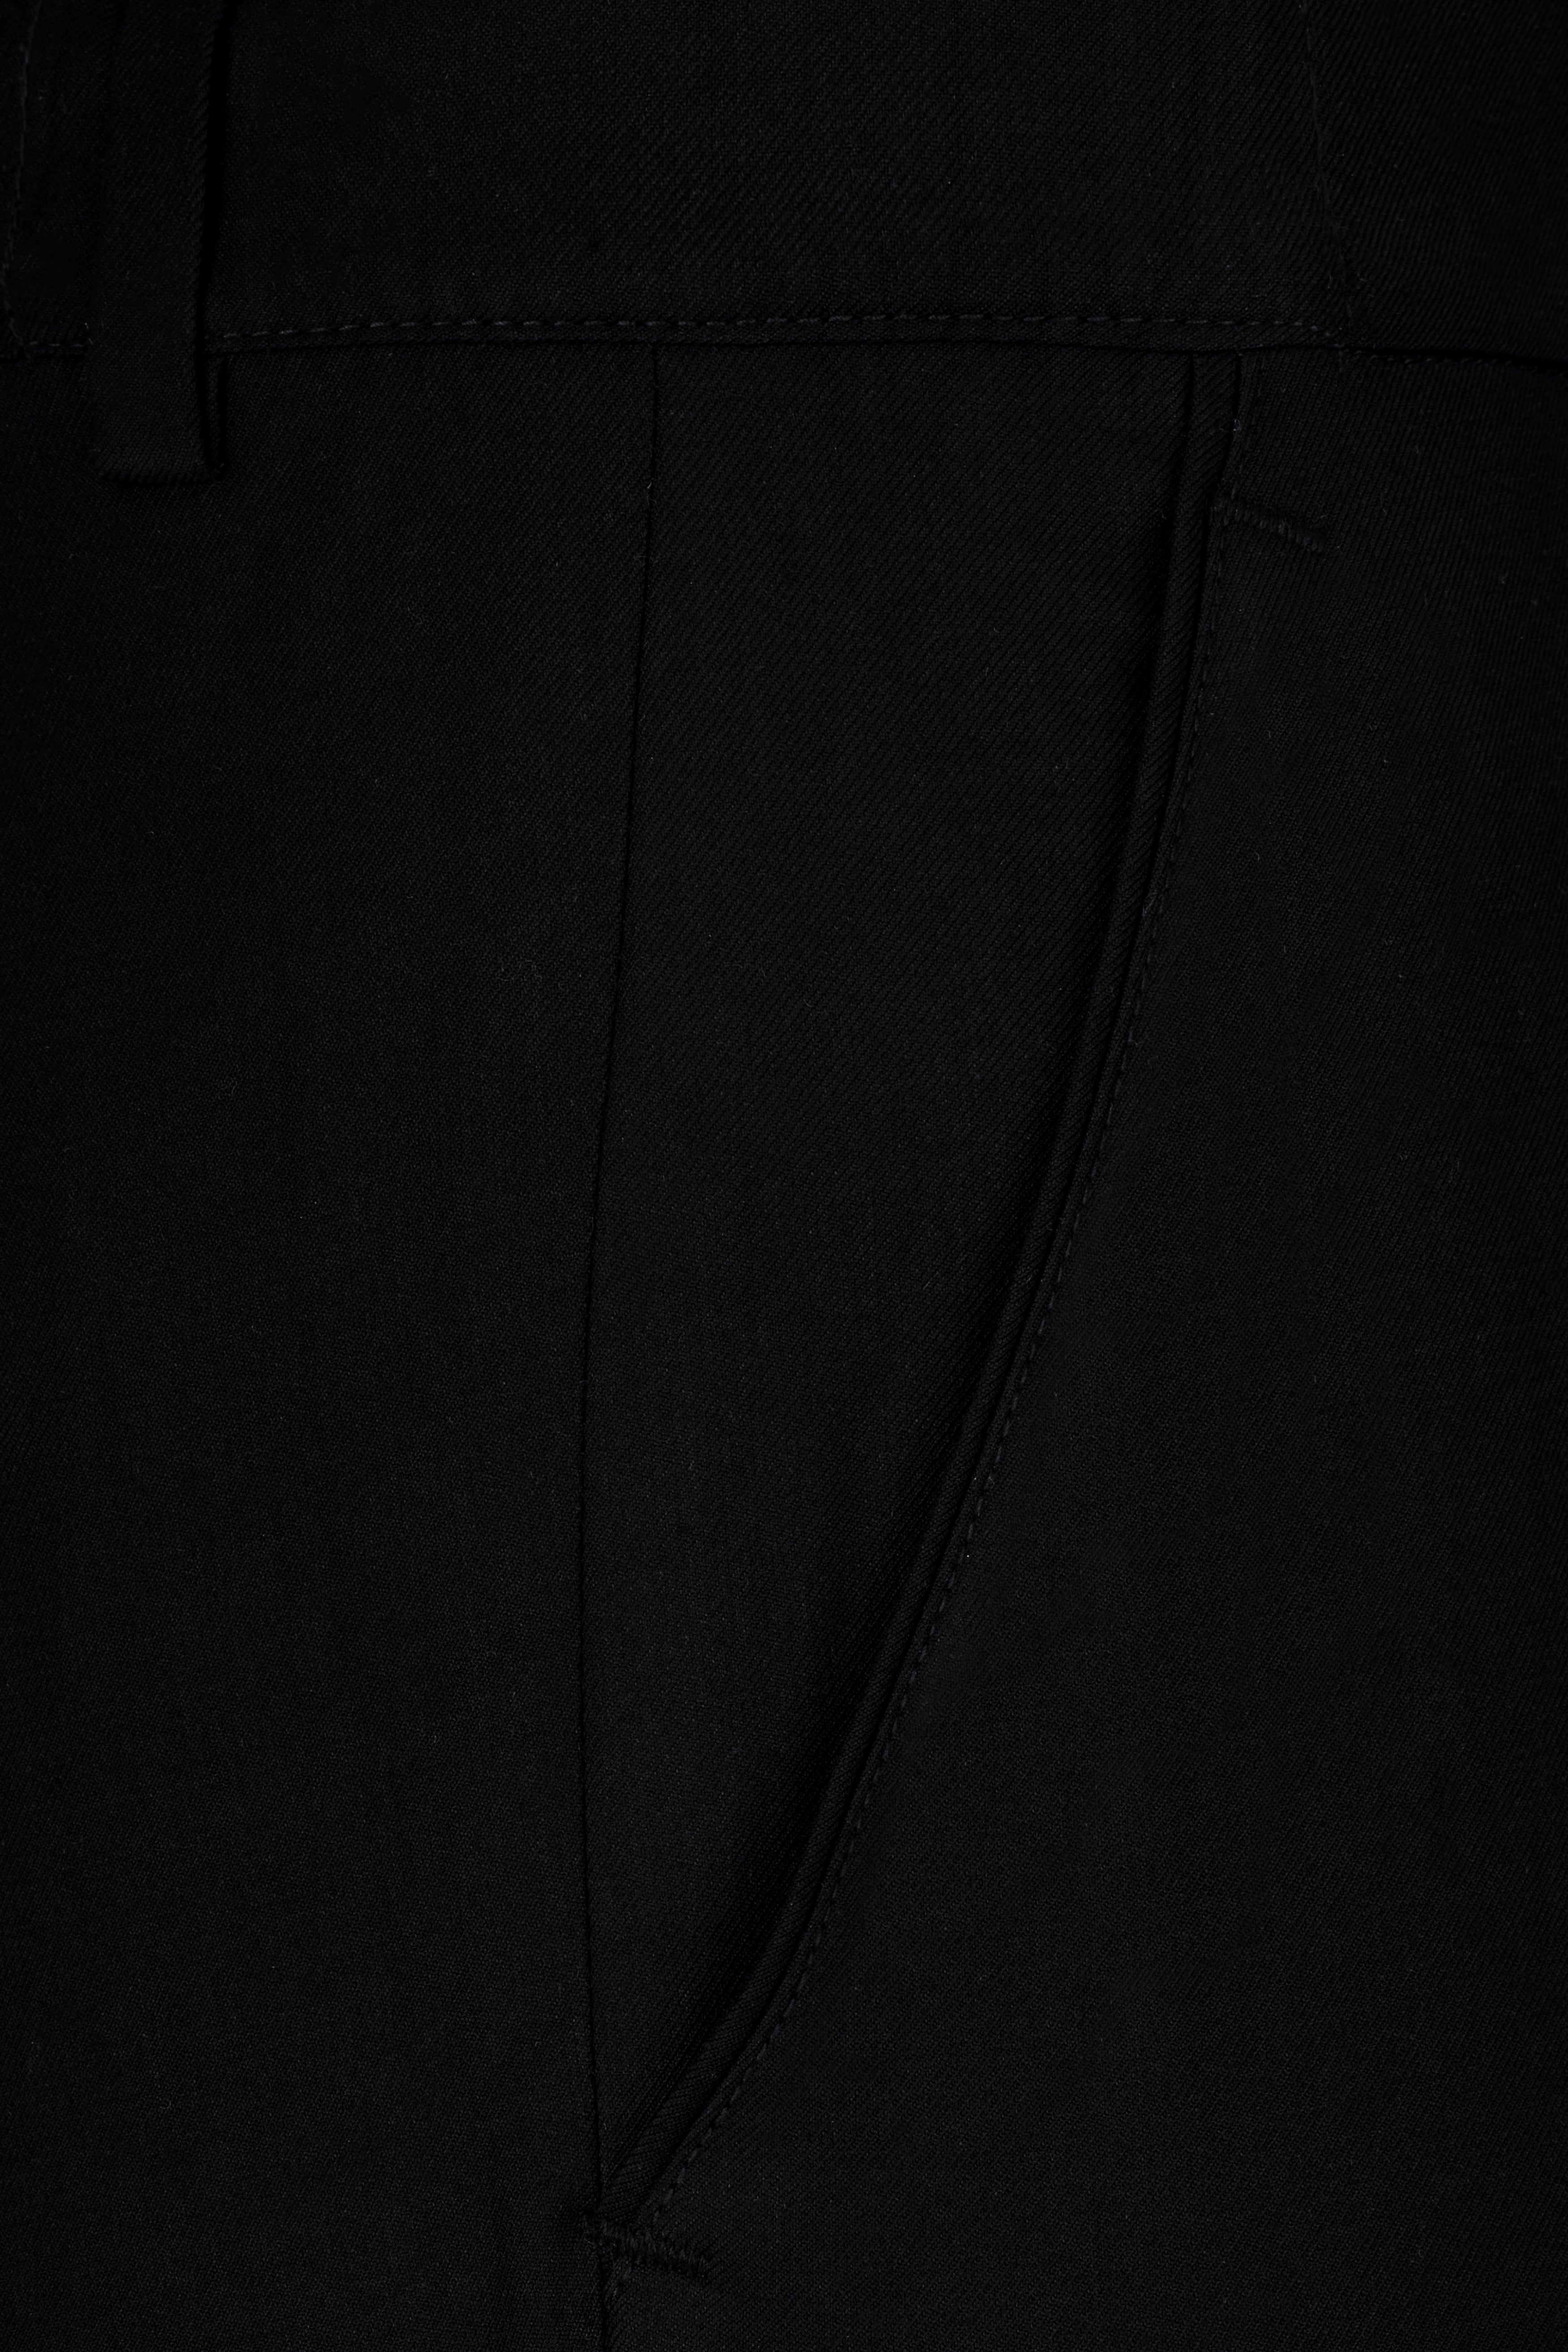 Jade Black Wool Rich Deer Hand Crafted Embroidered Bandhgala Designer Suit ST2870-BG-LB-E189-36, ST2870-BG-LB-E189-38, ST2870-BG-LB-E189-40, ST2870-BG-LB-E189-42, ST2870-BG-LB-E189-44, ST2870-BG-LB-E189-46, ST2870-BG-LB-E189-48, ST2870-BG-LB-E189-50, ST2870-BG-LB-E189-52, ST2870-BG-LB-E189-54, ST2870-BG-LB-E189-56, ST2870-BG-LB-E189-58, ST2870-BG-LB-E189-60